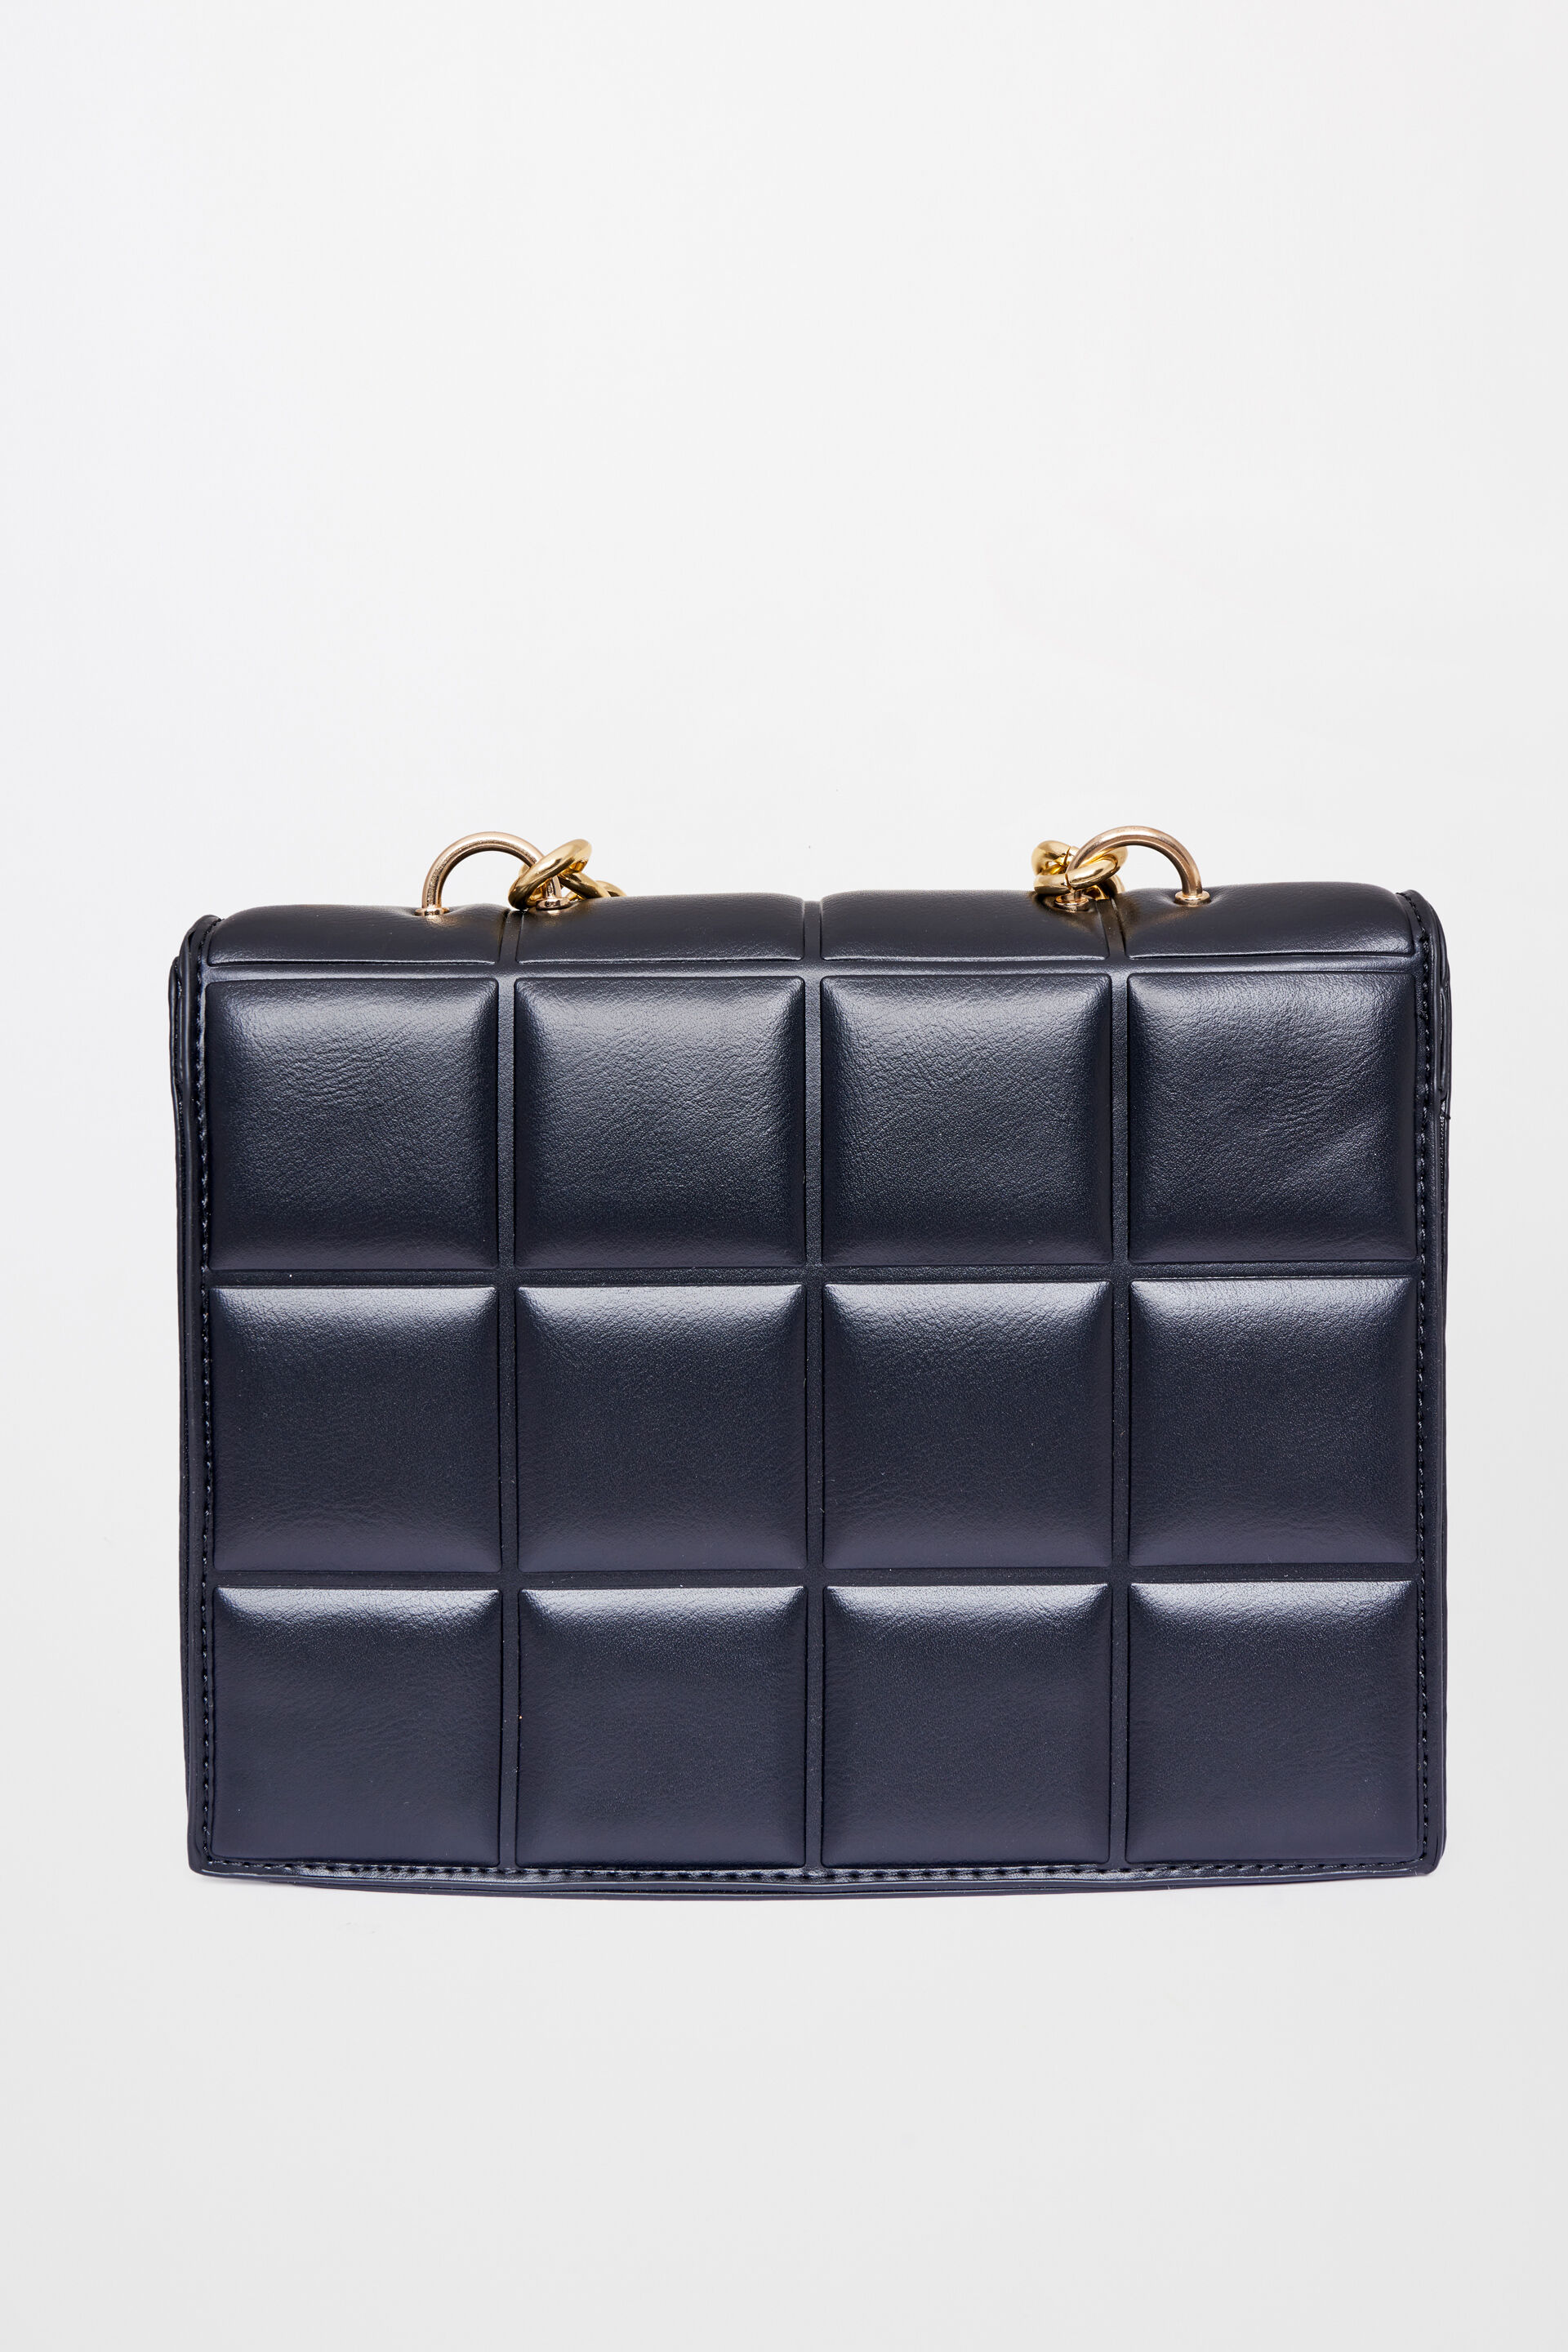 Transparent Handbags for women 2pcs bag Black